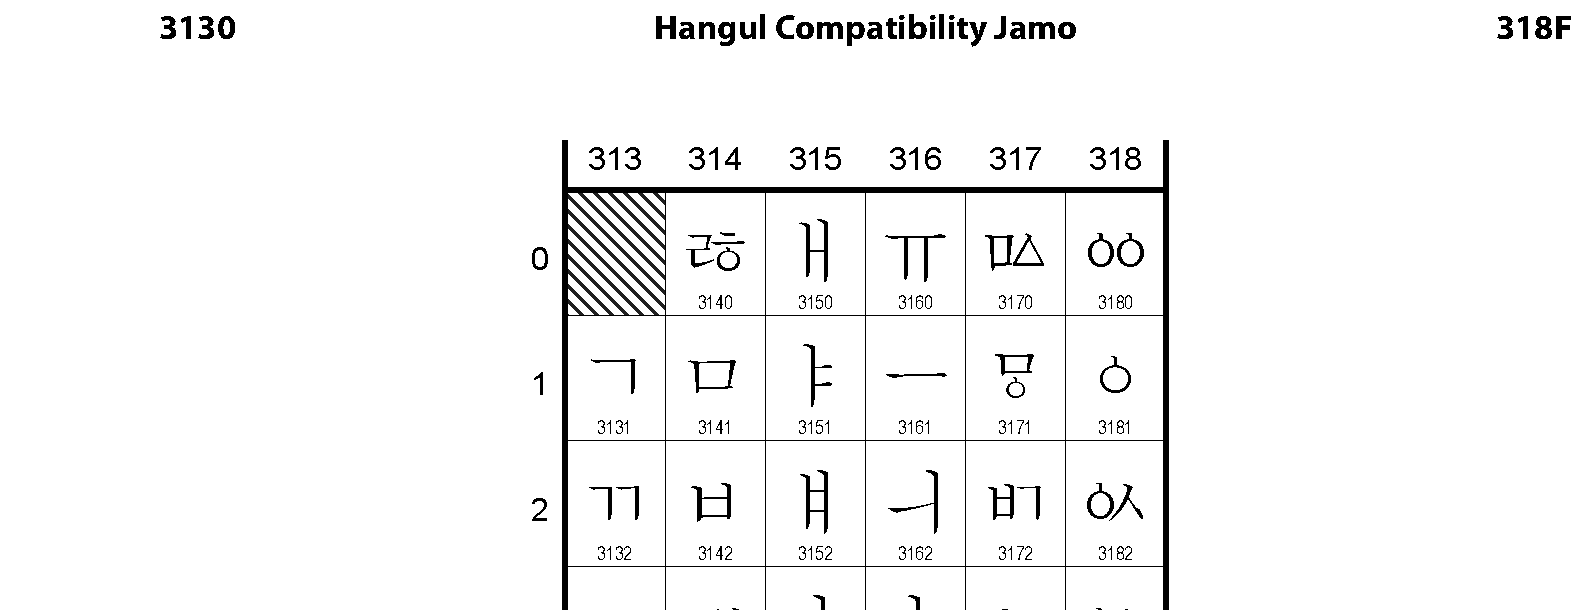 Unicode - Hangul Compatibility Jamo